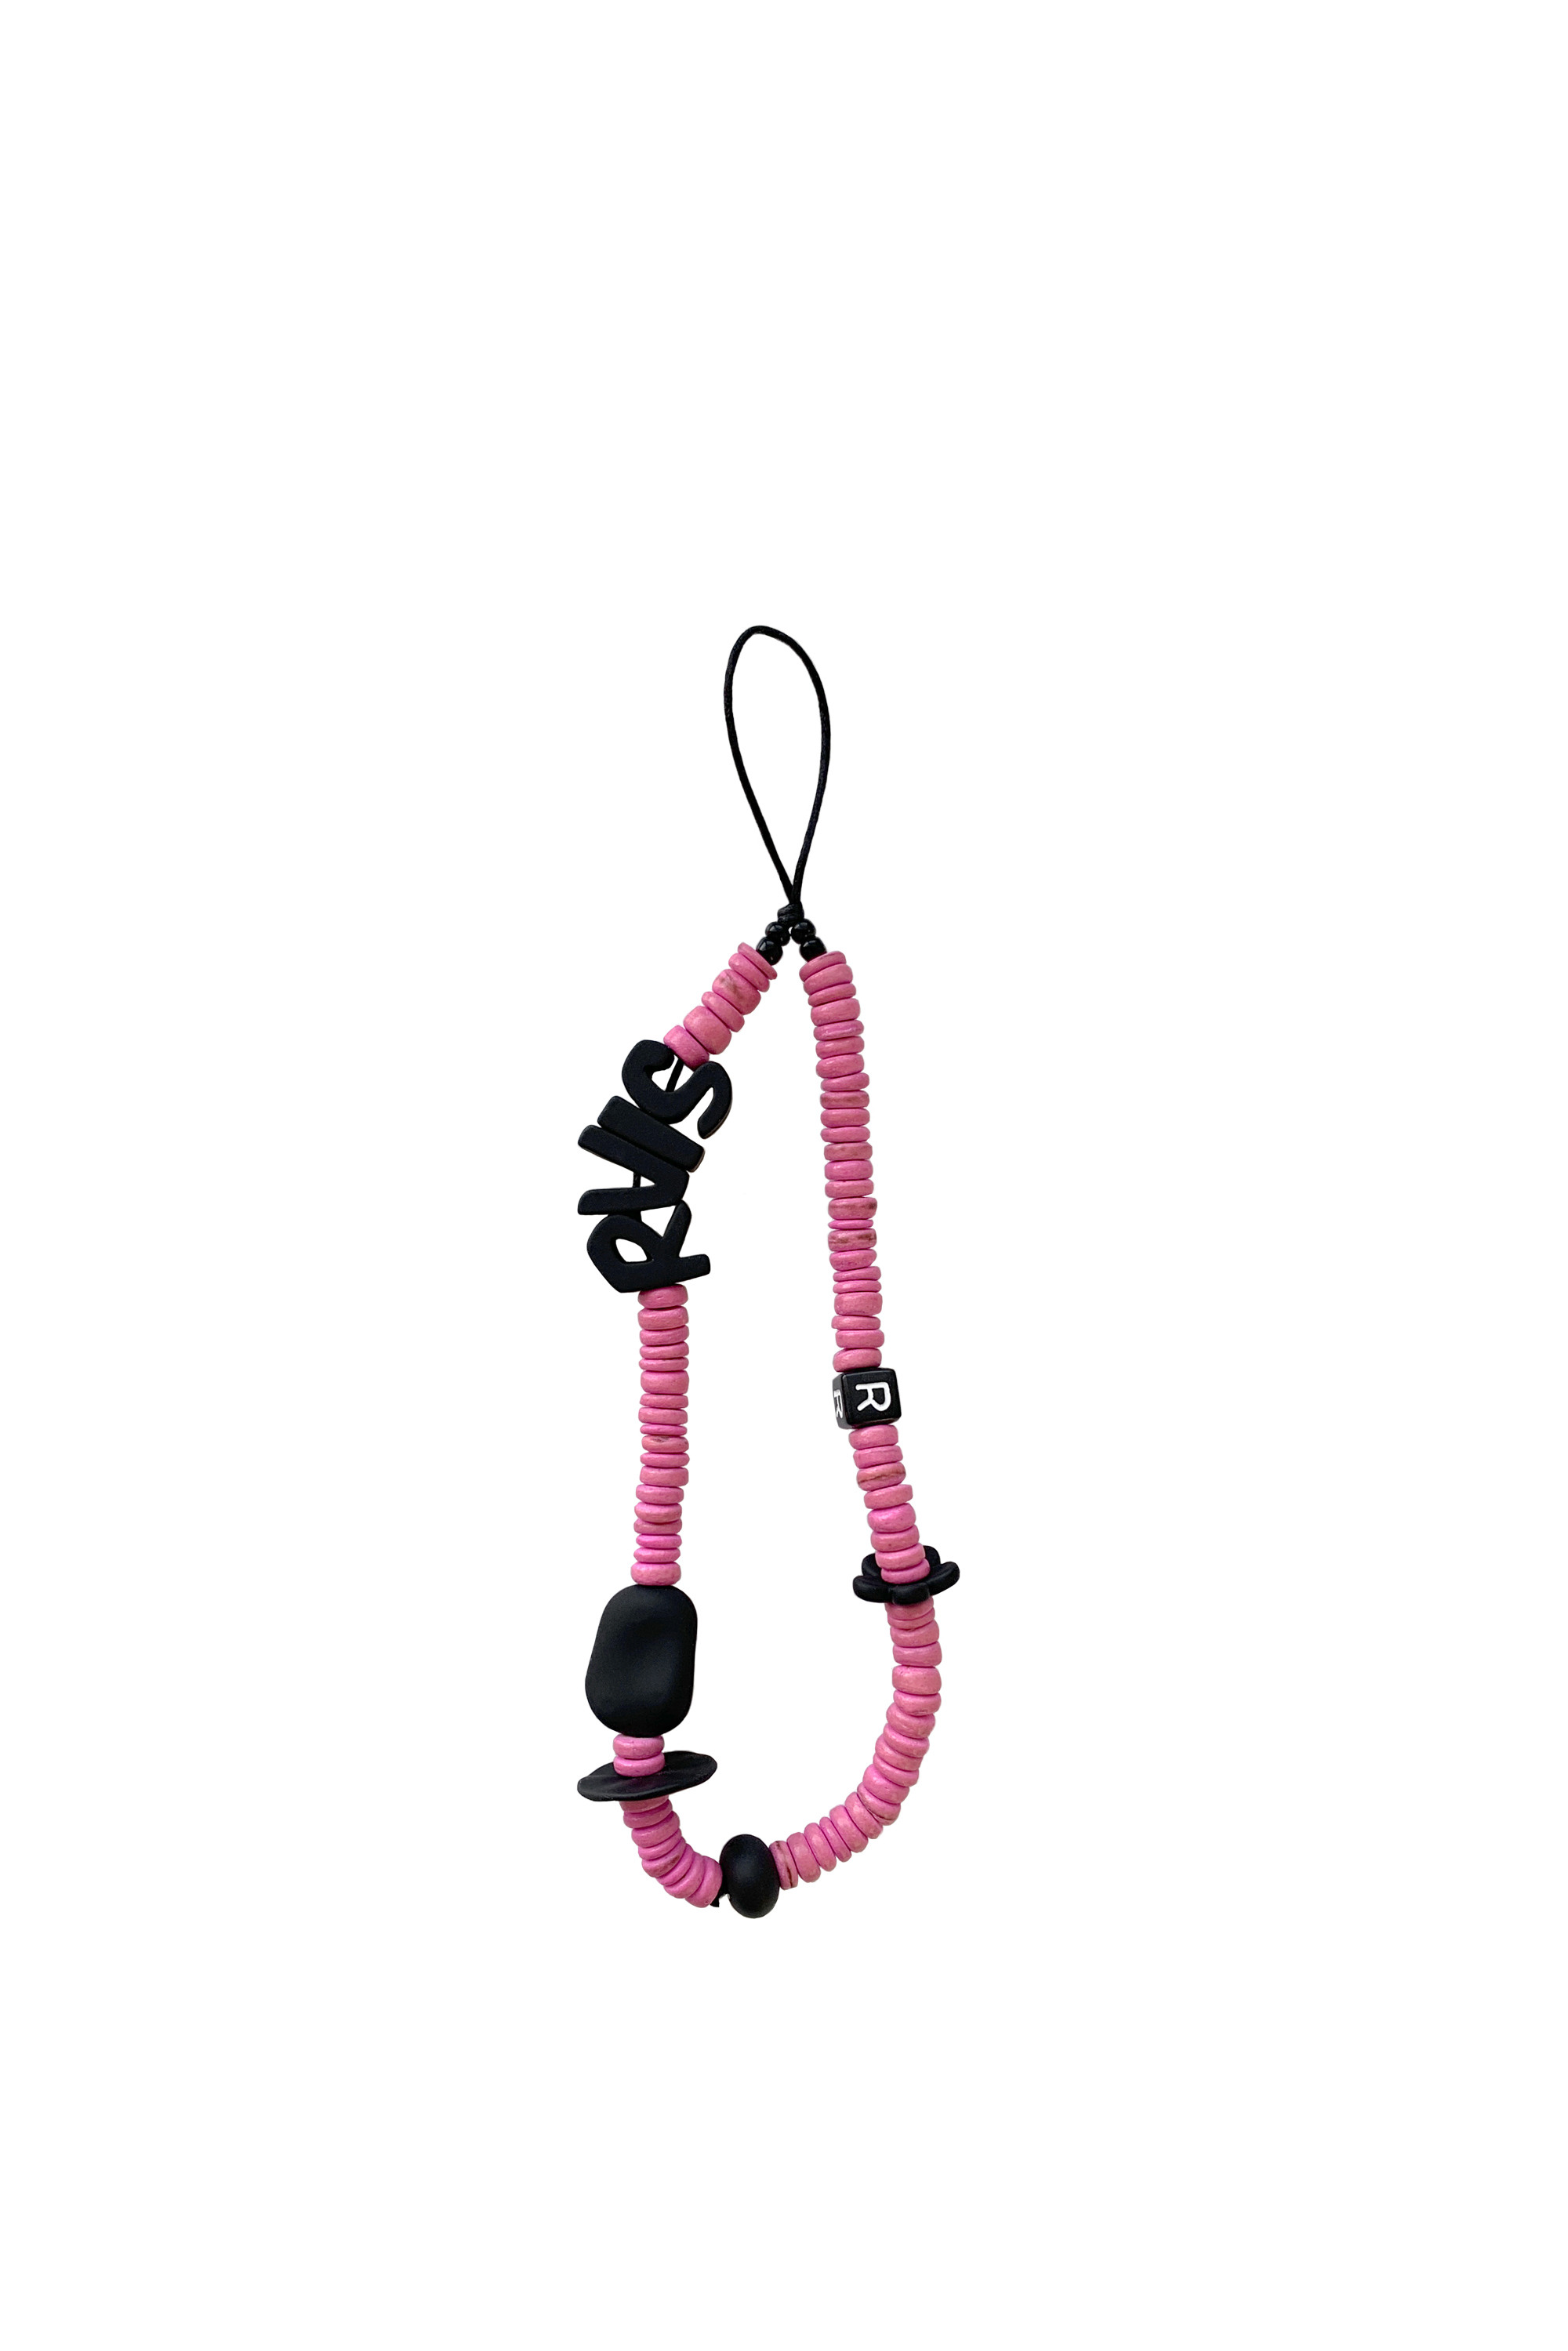 RVIS-phone-strap-pink-2.jpg